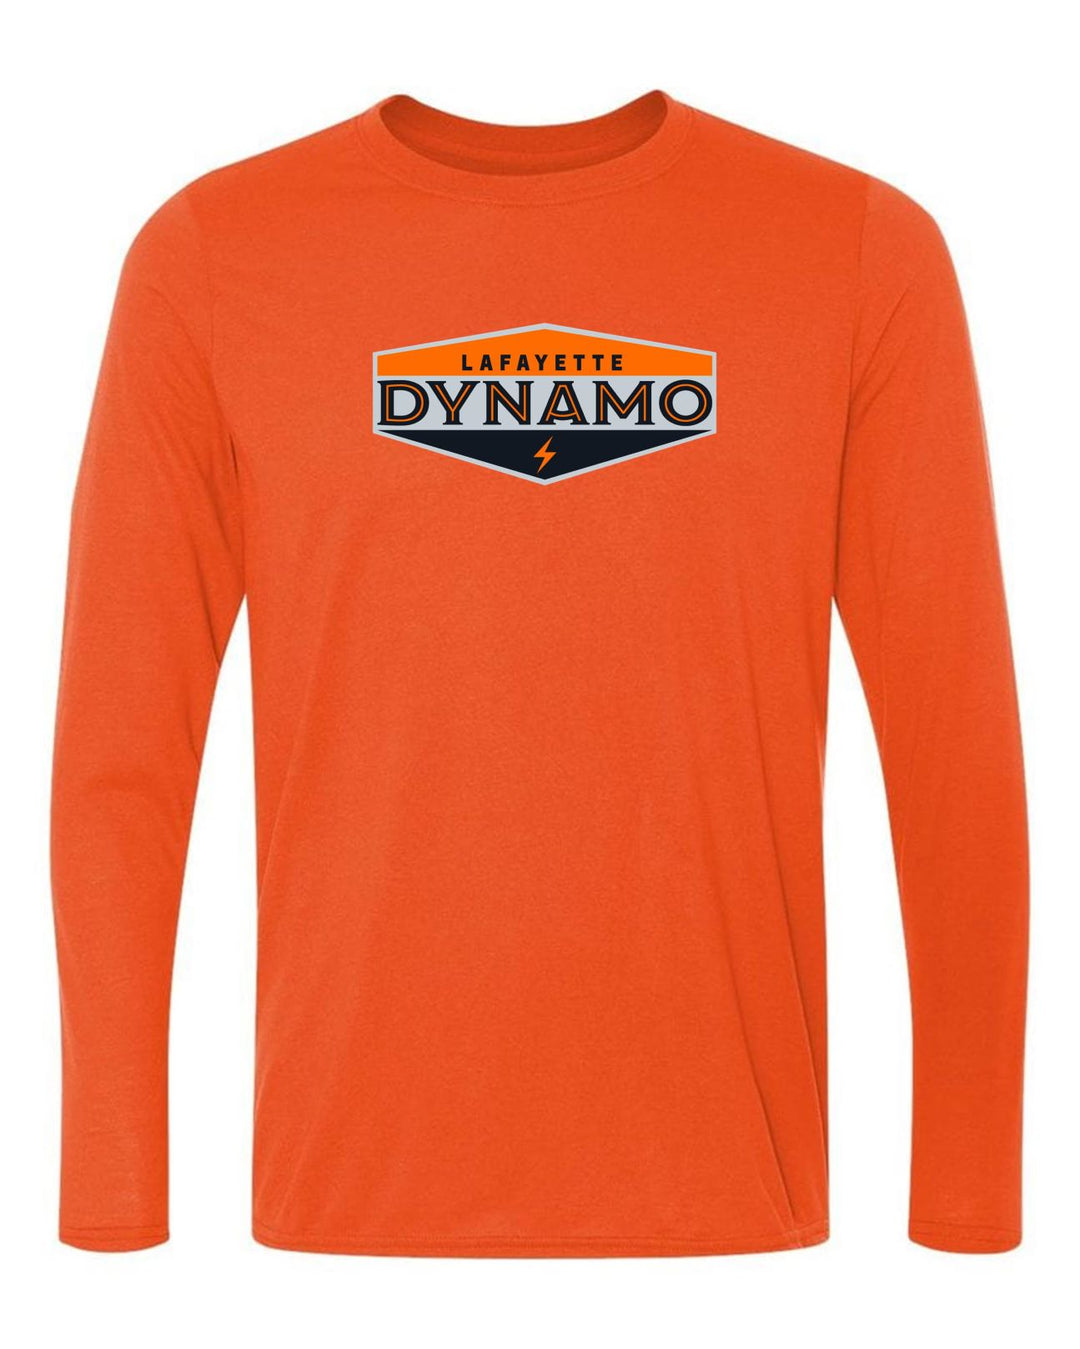 Dynamo Juniors Long-Sleeve T-Shirt  WOMENS MEDIUM ORANGE - Third Coast Soccer